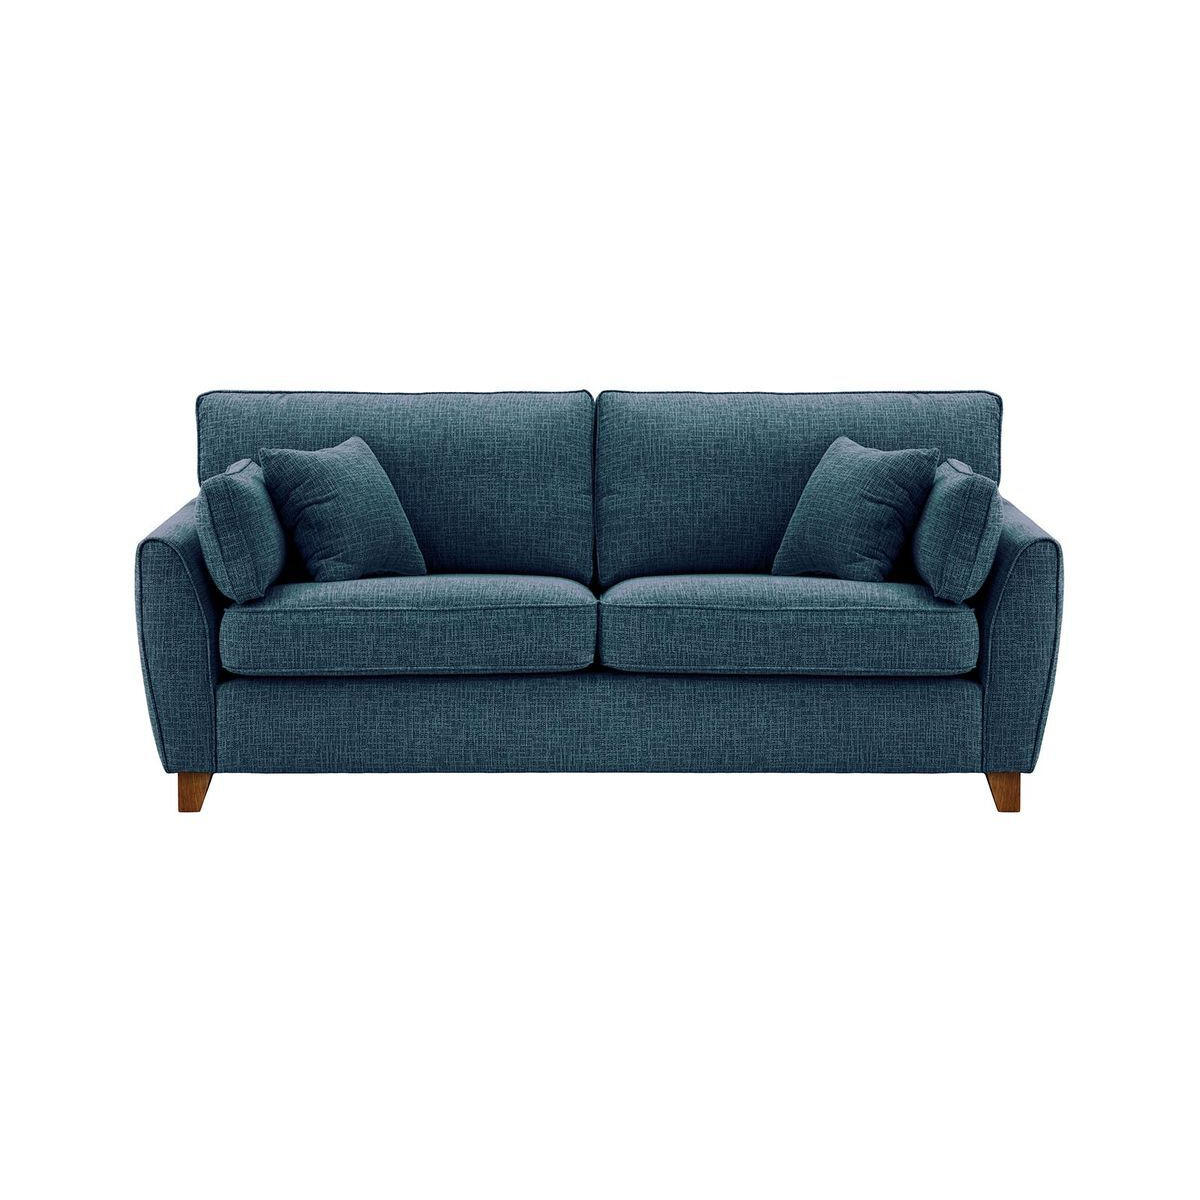 James 3 Seater Sofa, teal, Leg colour: dark oak - image 1